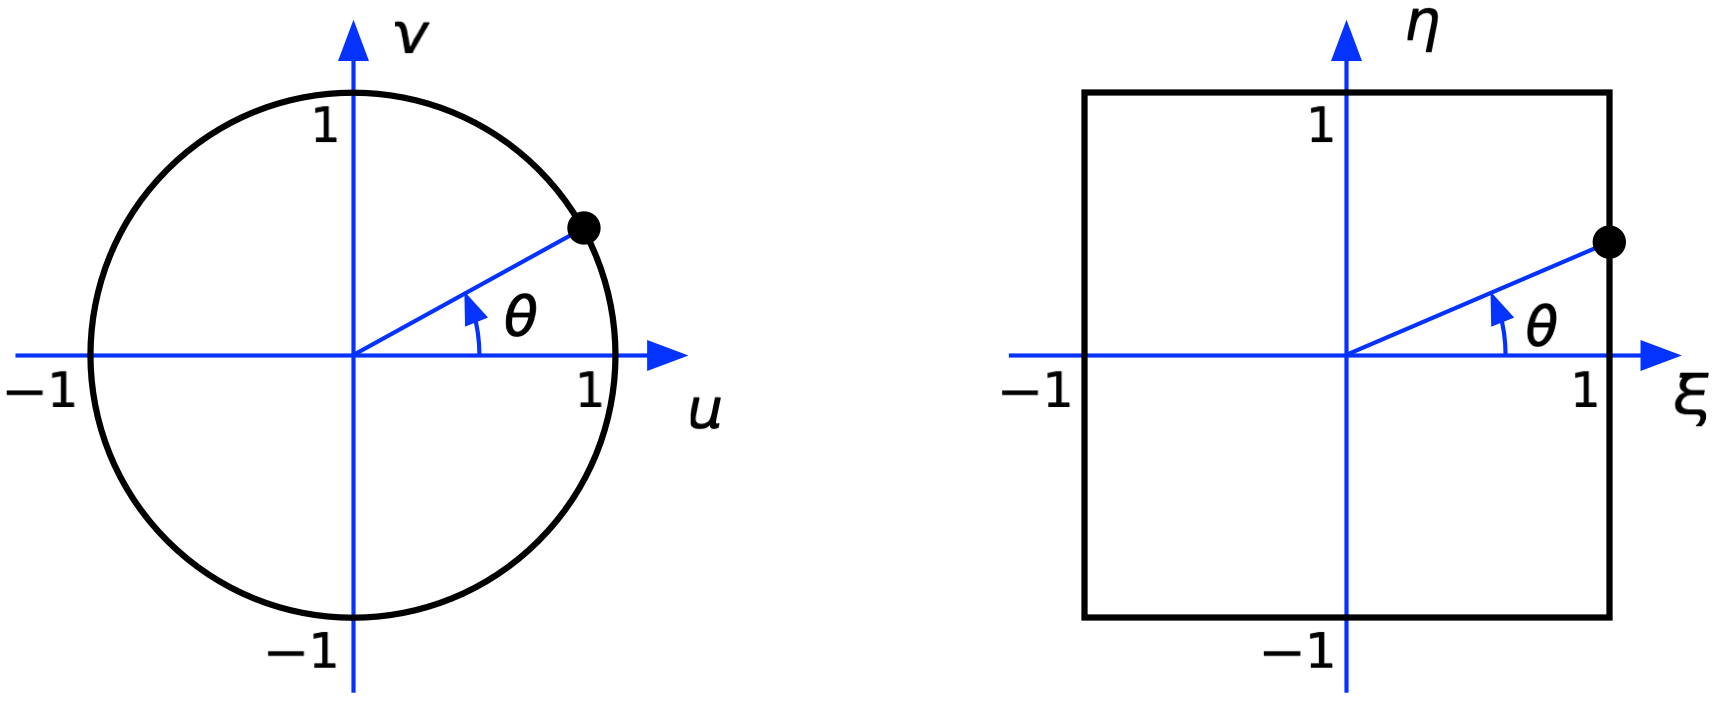 Origin-centered circle and square